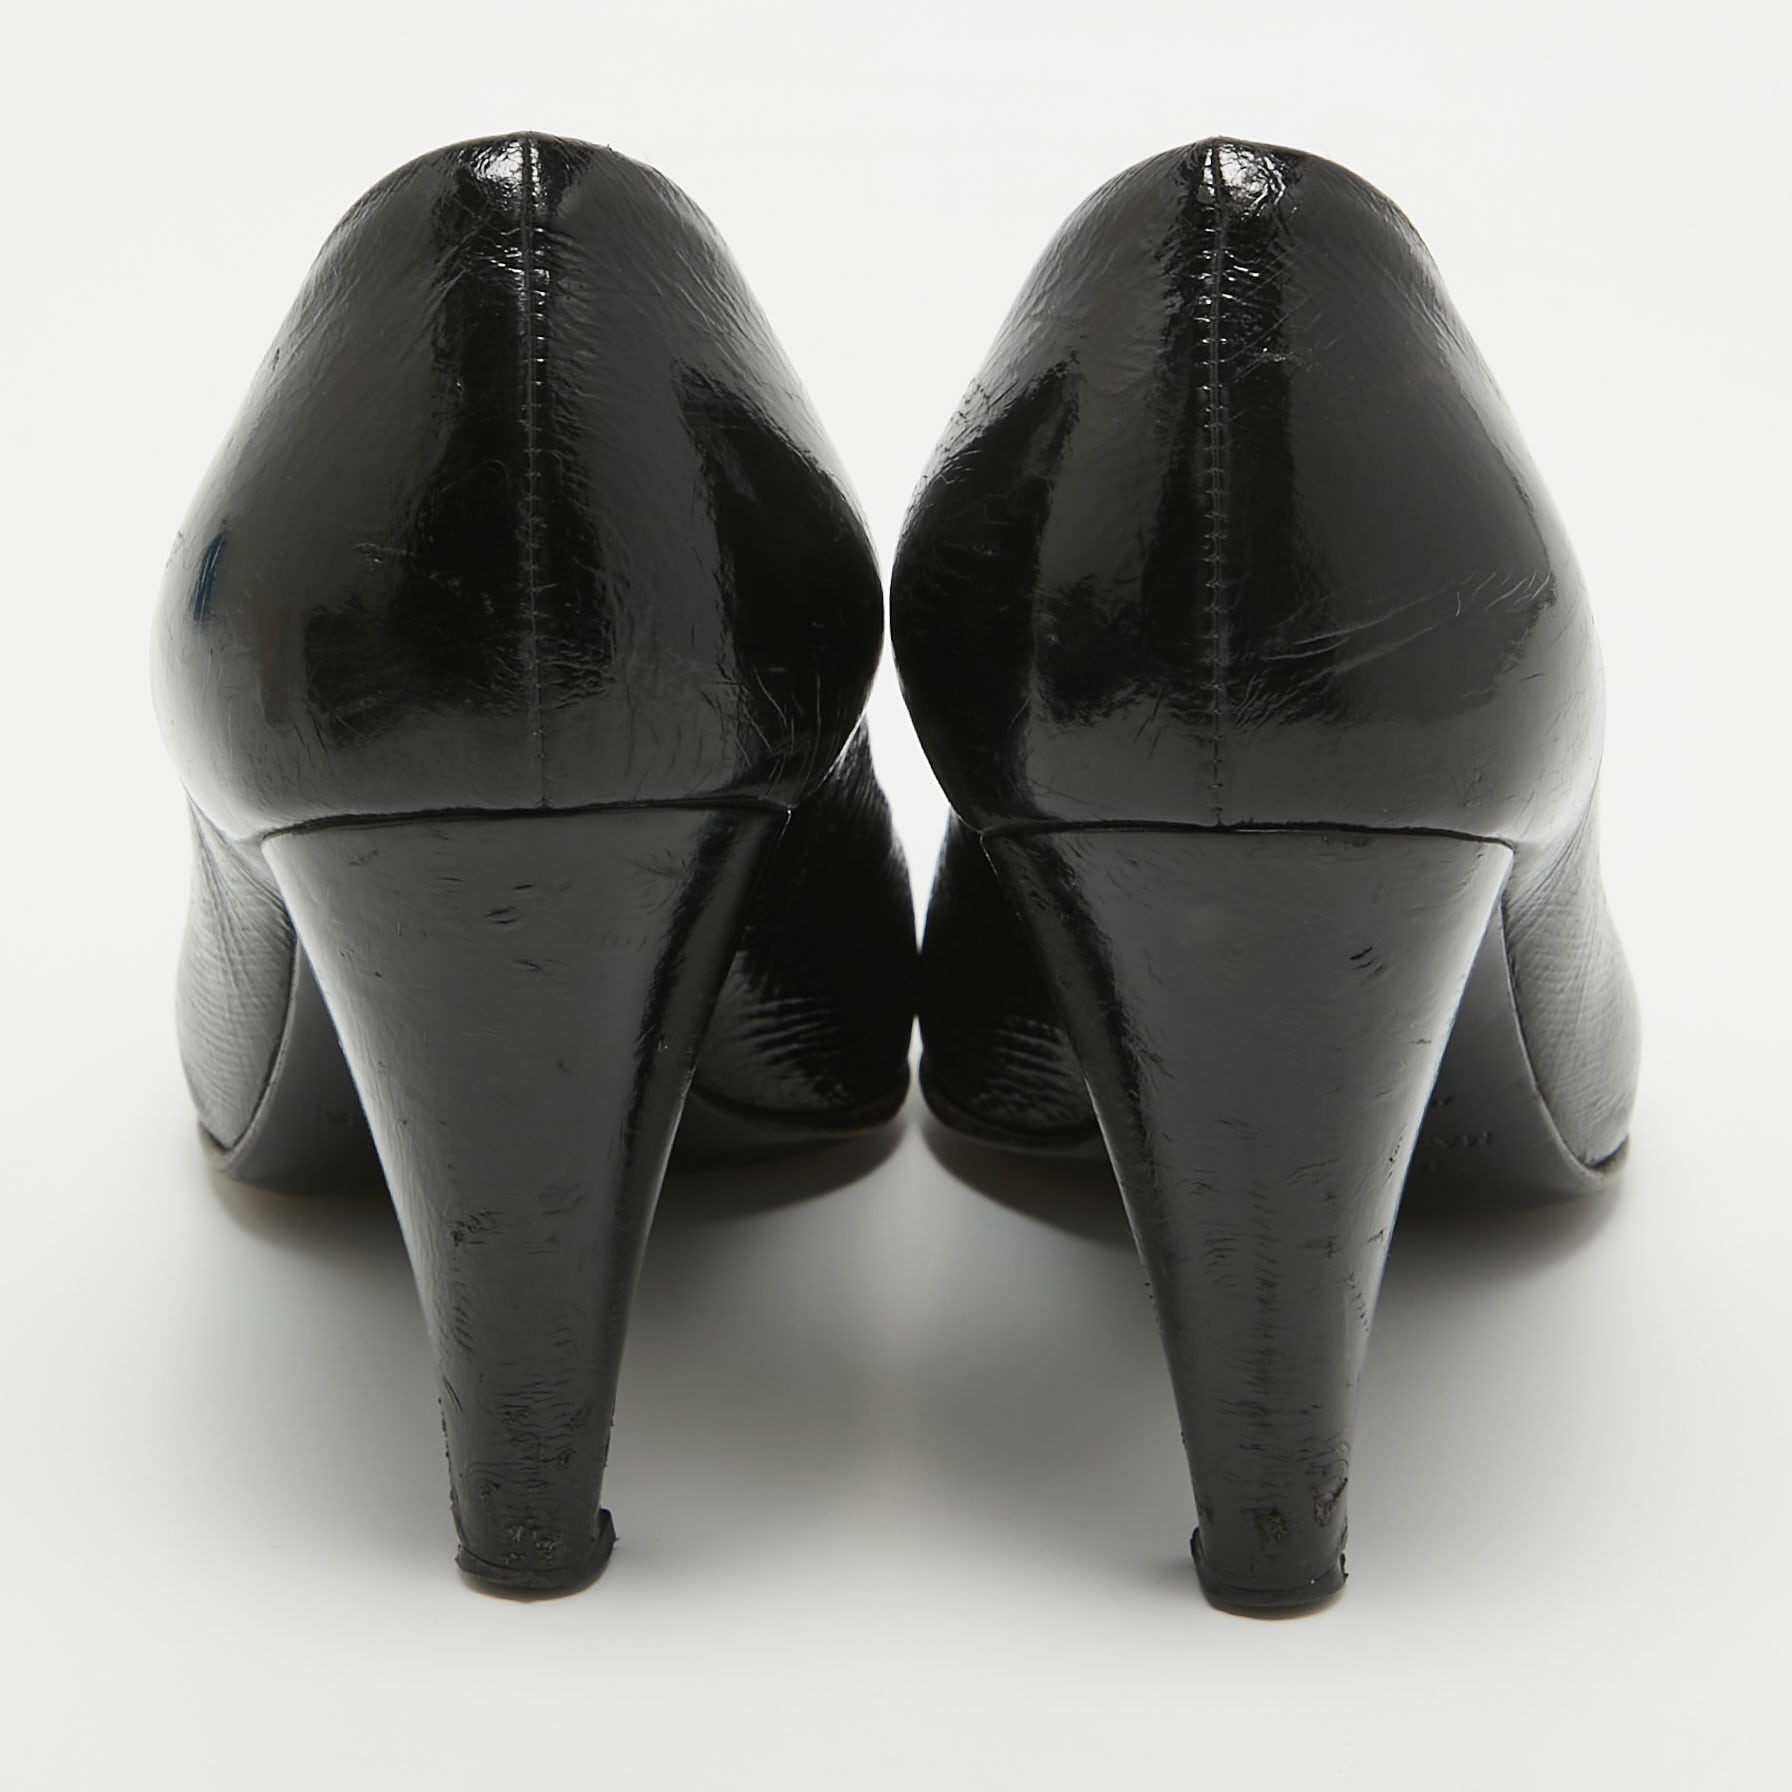 Marc By Marc Jacobs Black Patent Leather Pumps Size 38